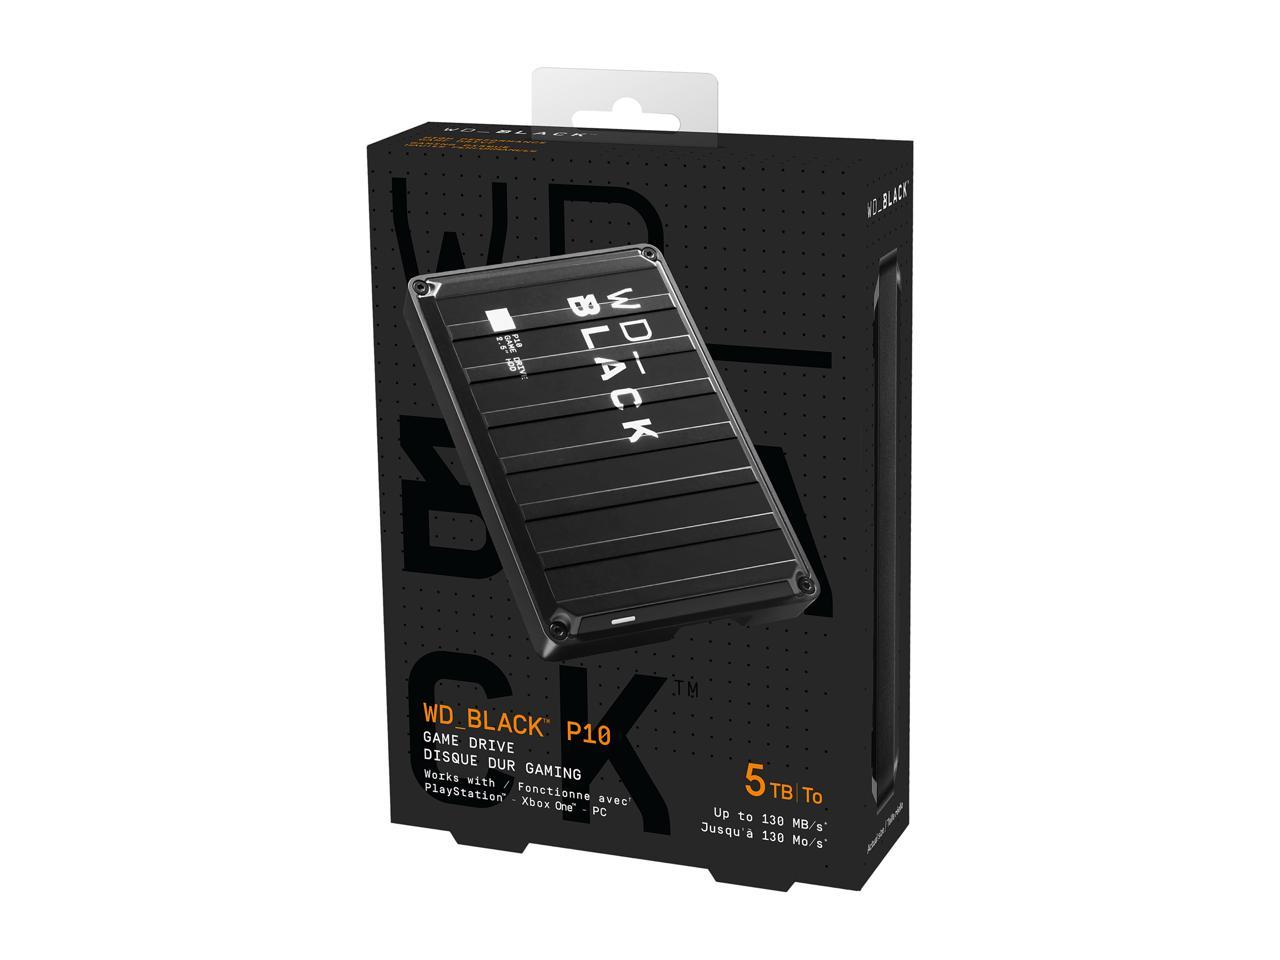 WD_BLACK P10 Game Drive External USB 3.2 Hard Drive up to 5 TB